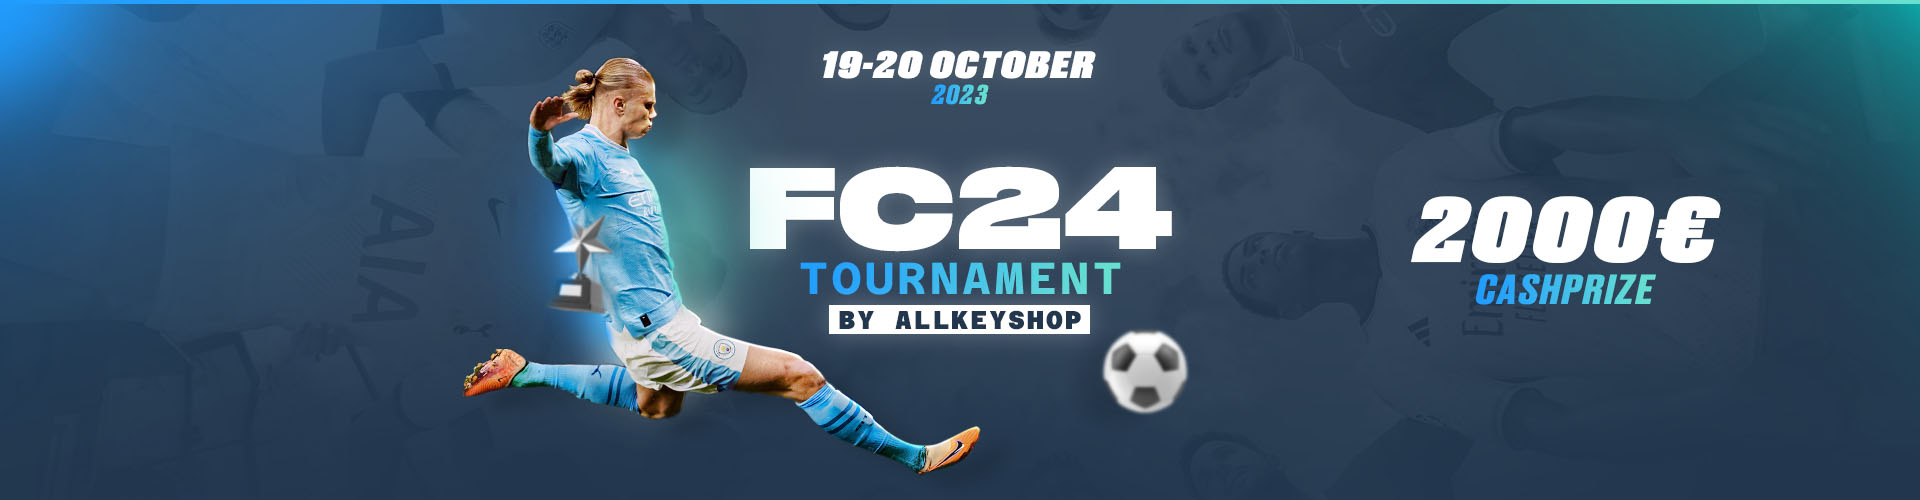 FC 24 Tournament by Allkeyshop